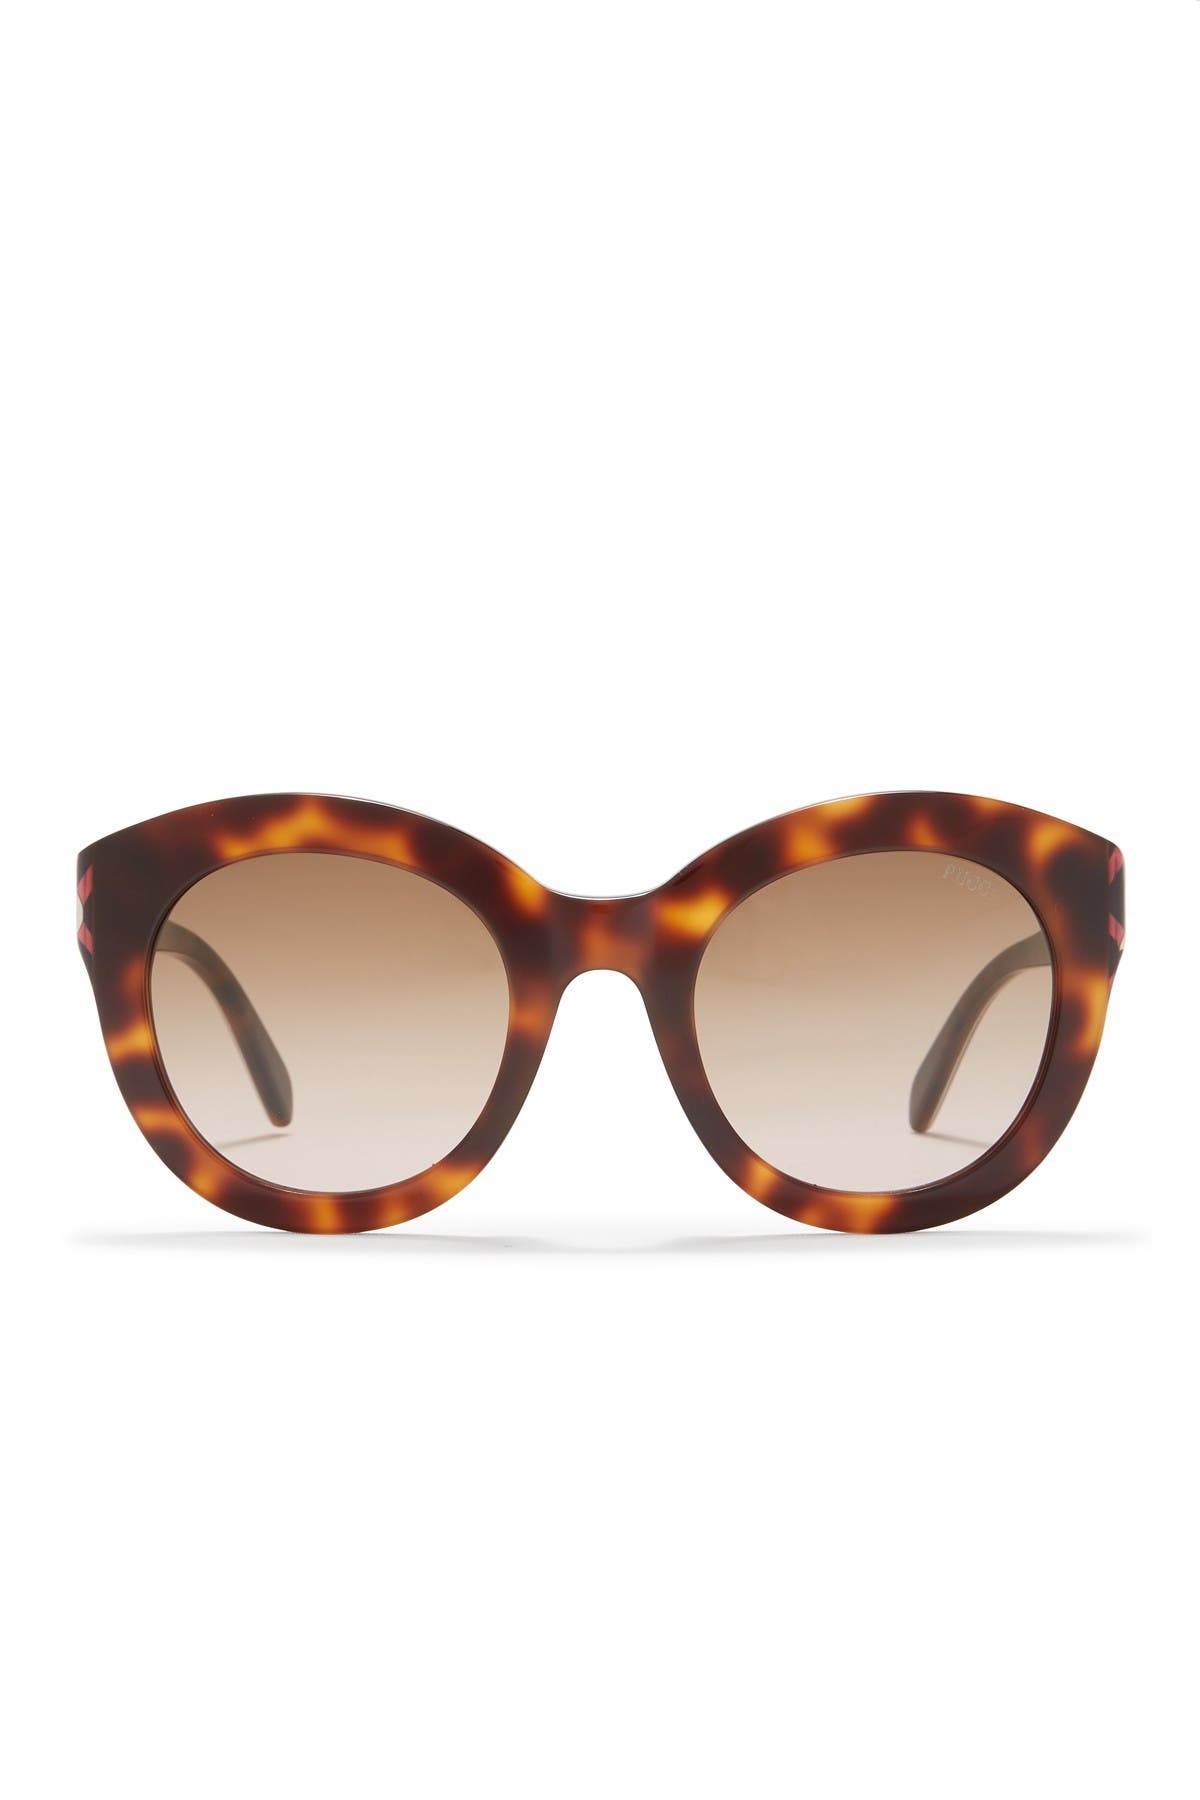 Emilio Pucci 51mm Round Sunglasses In Dark Brown6